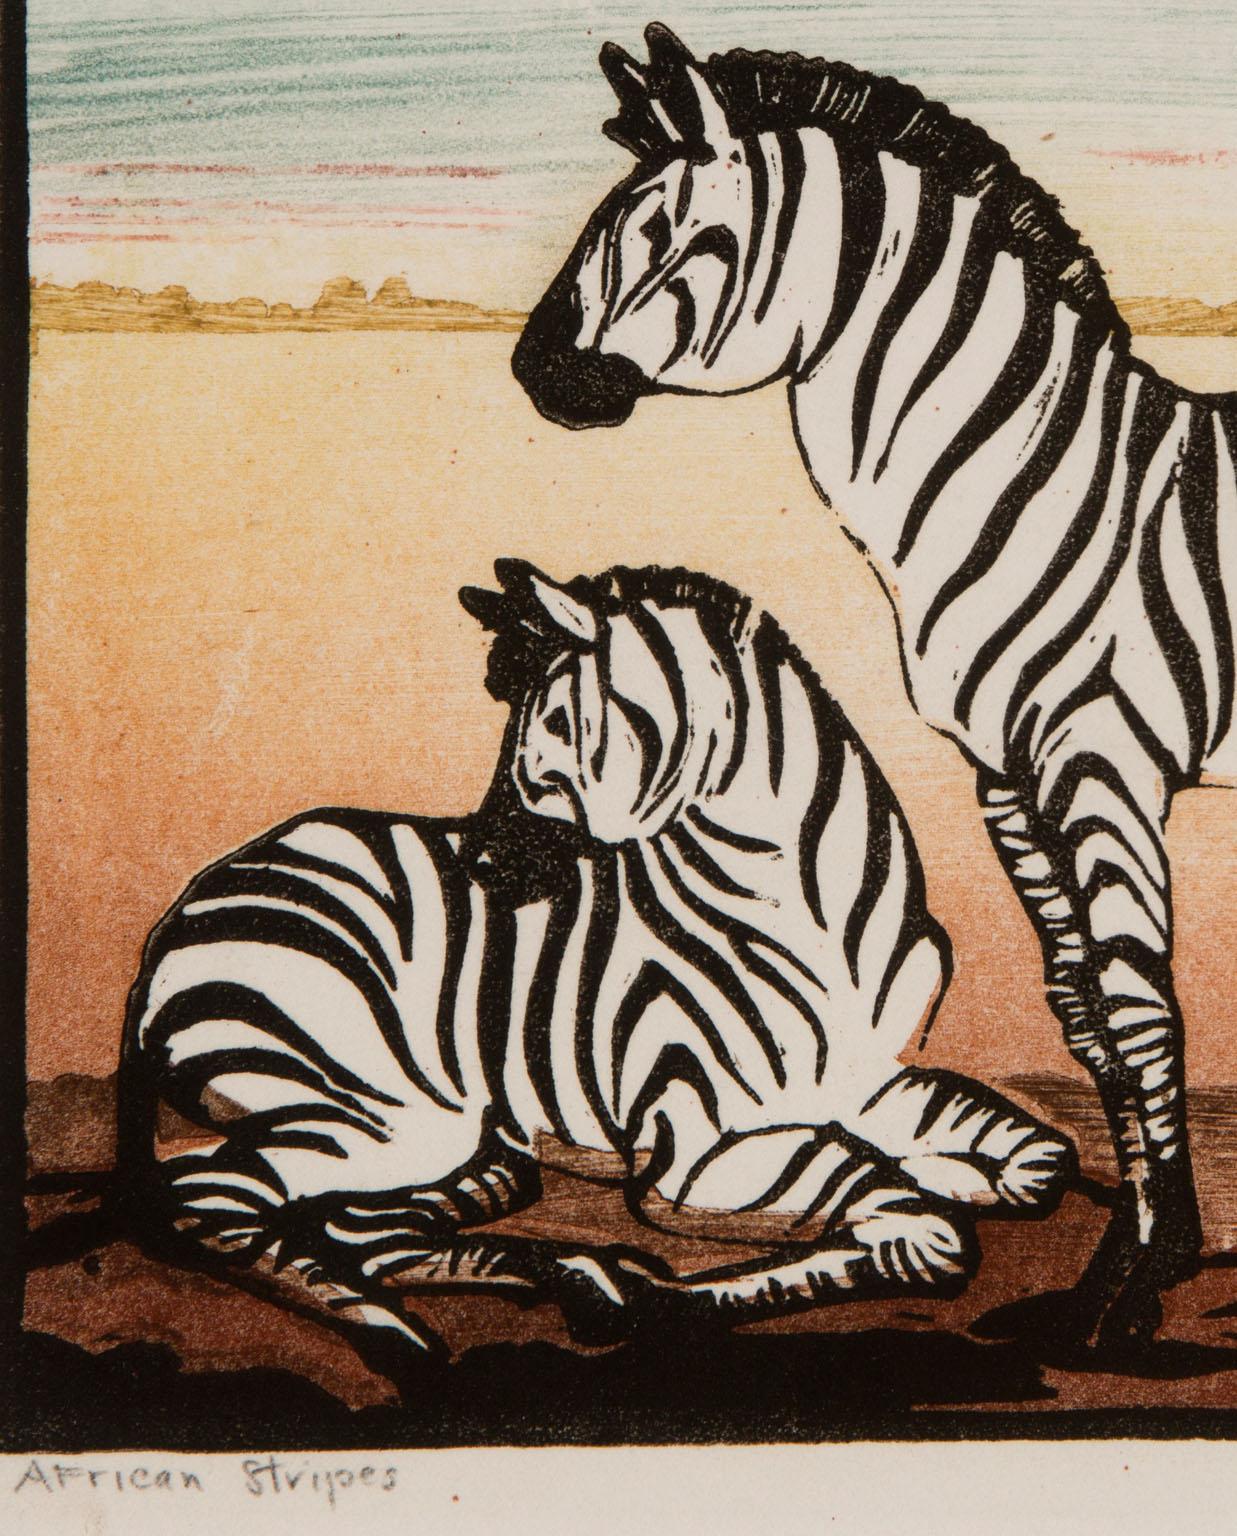 African Stripes - Beige Animal Print by Helen M. Seegert